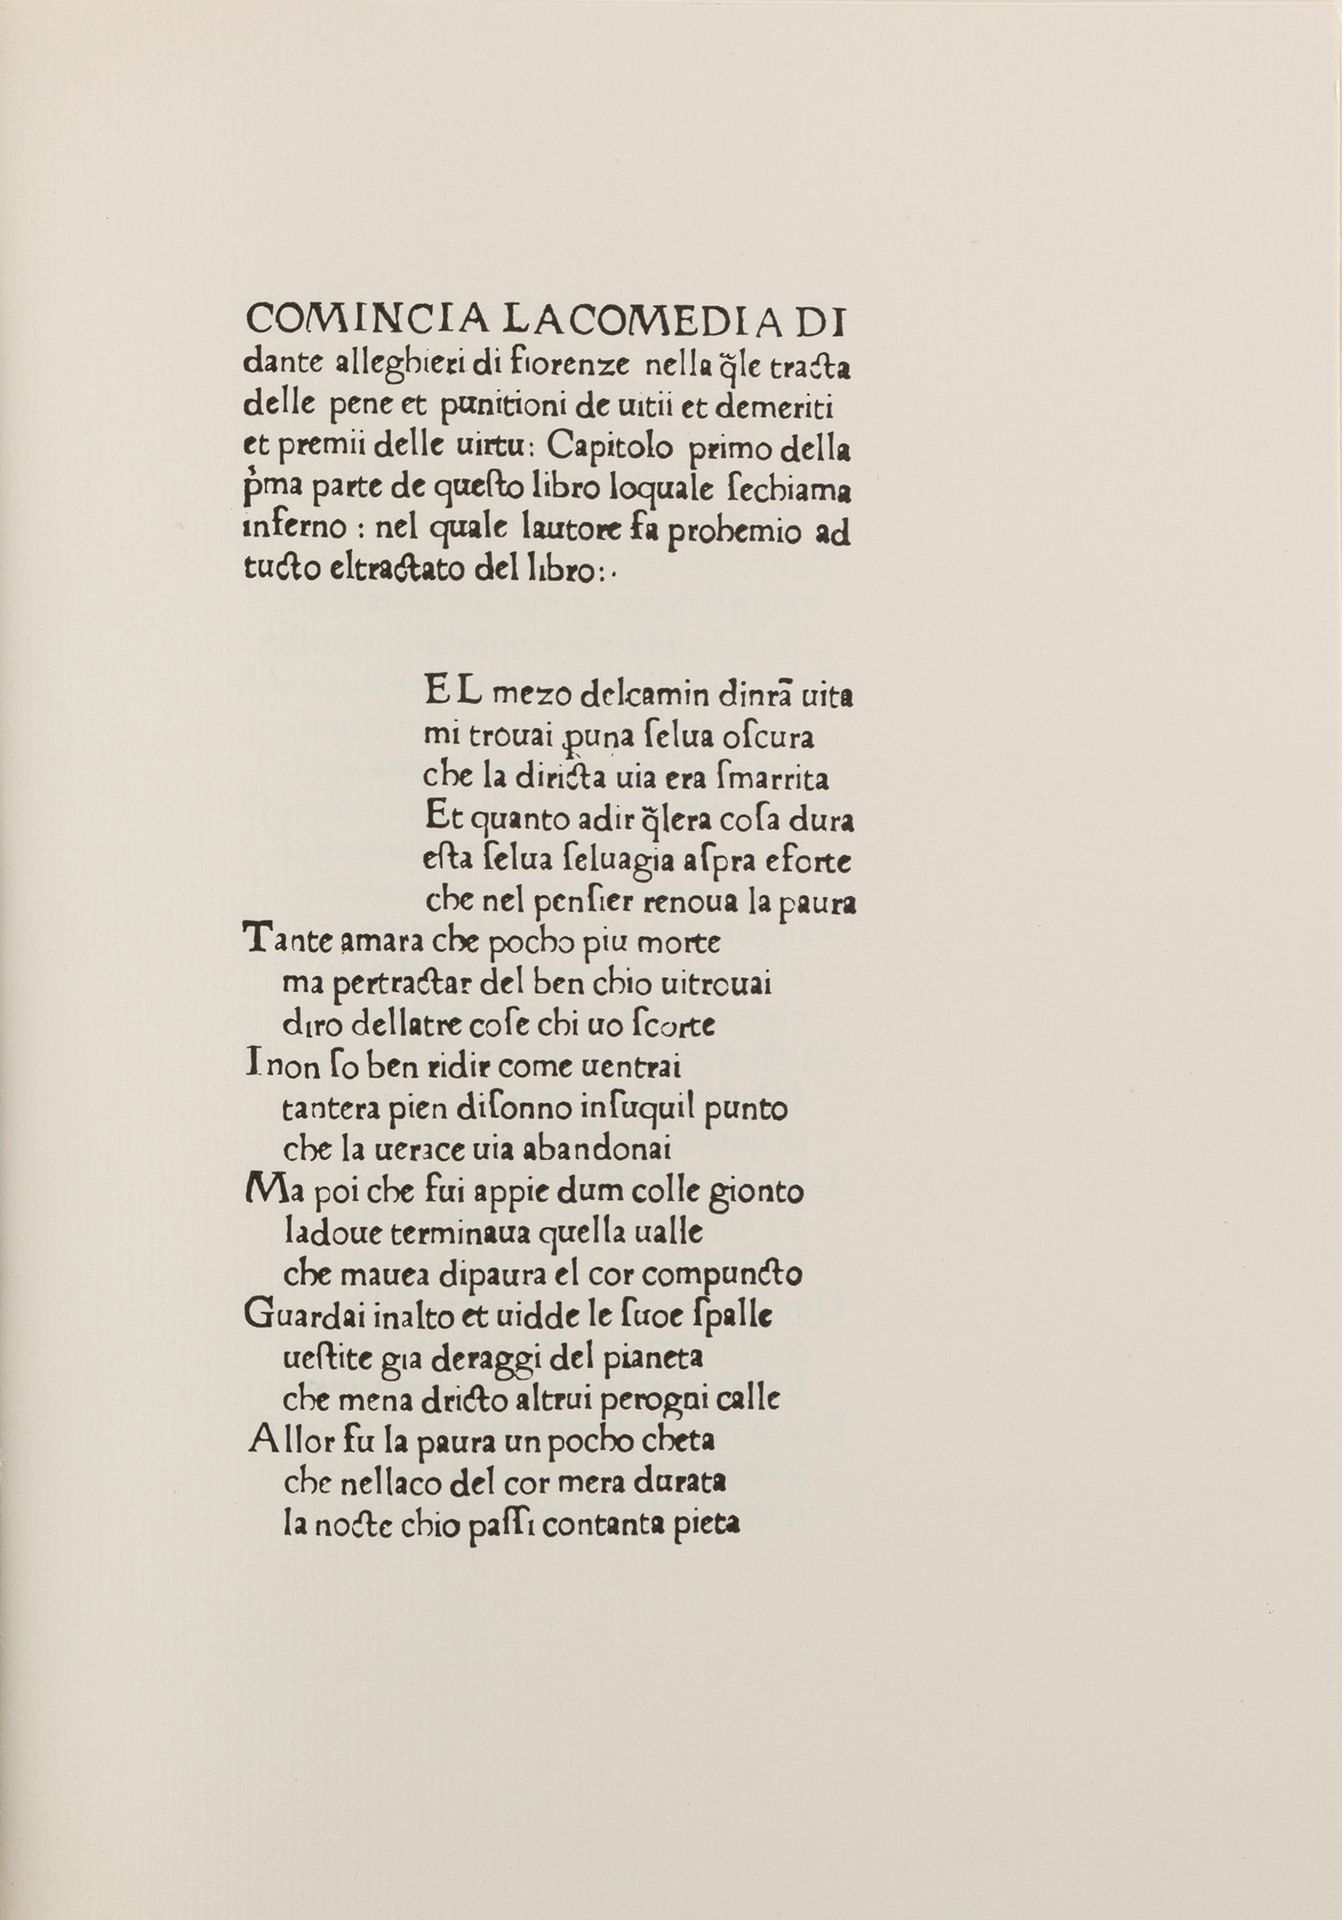 DANTE ALIGHIERI Alighieri, Dante - The Comedia by dante alleghieri

Ravenna, Edi&hellip;